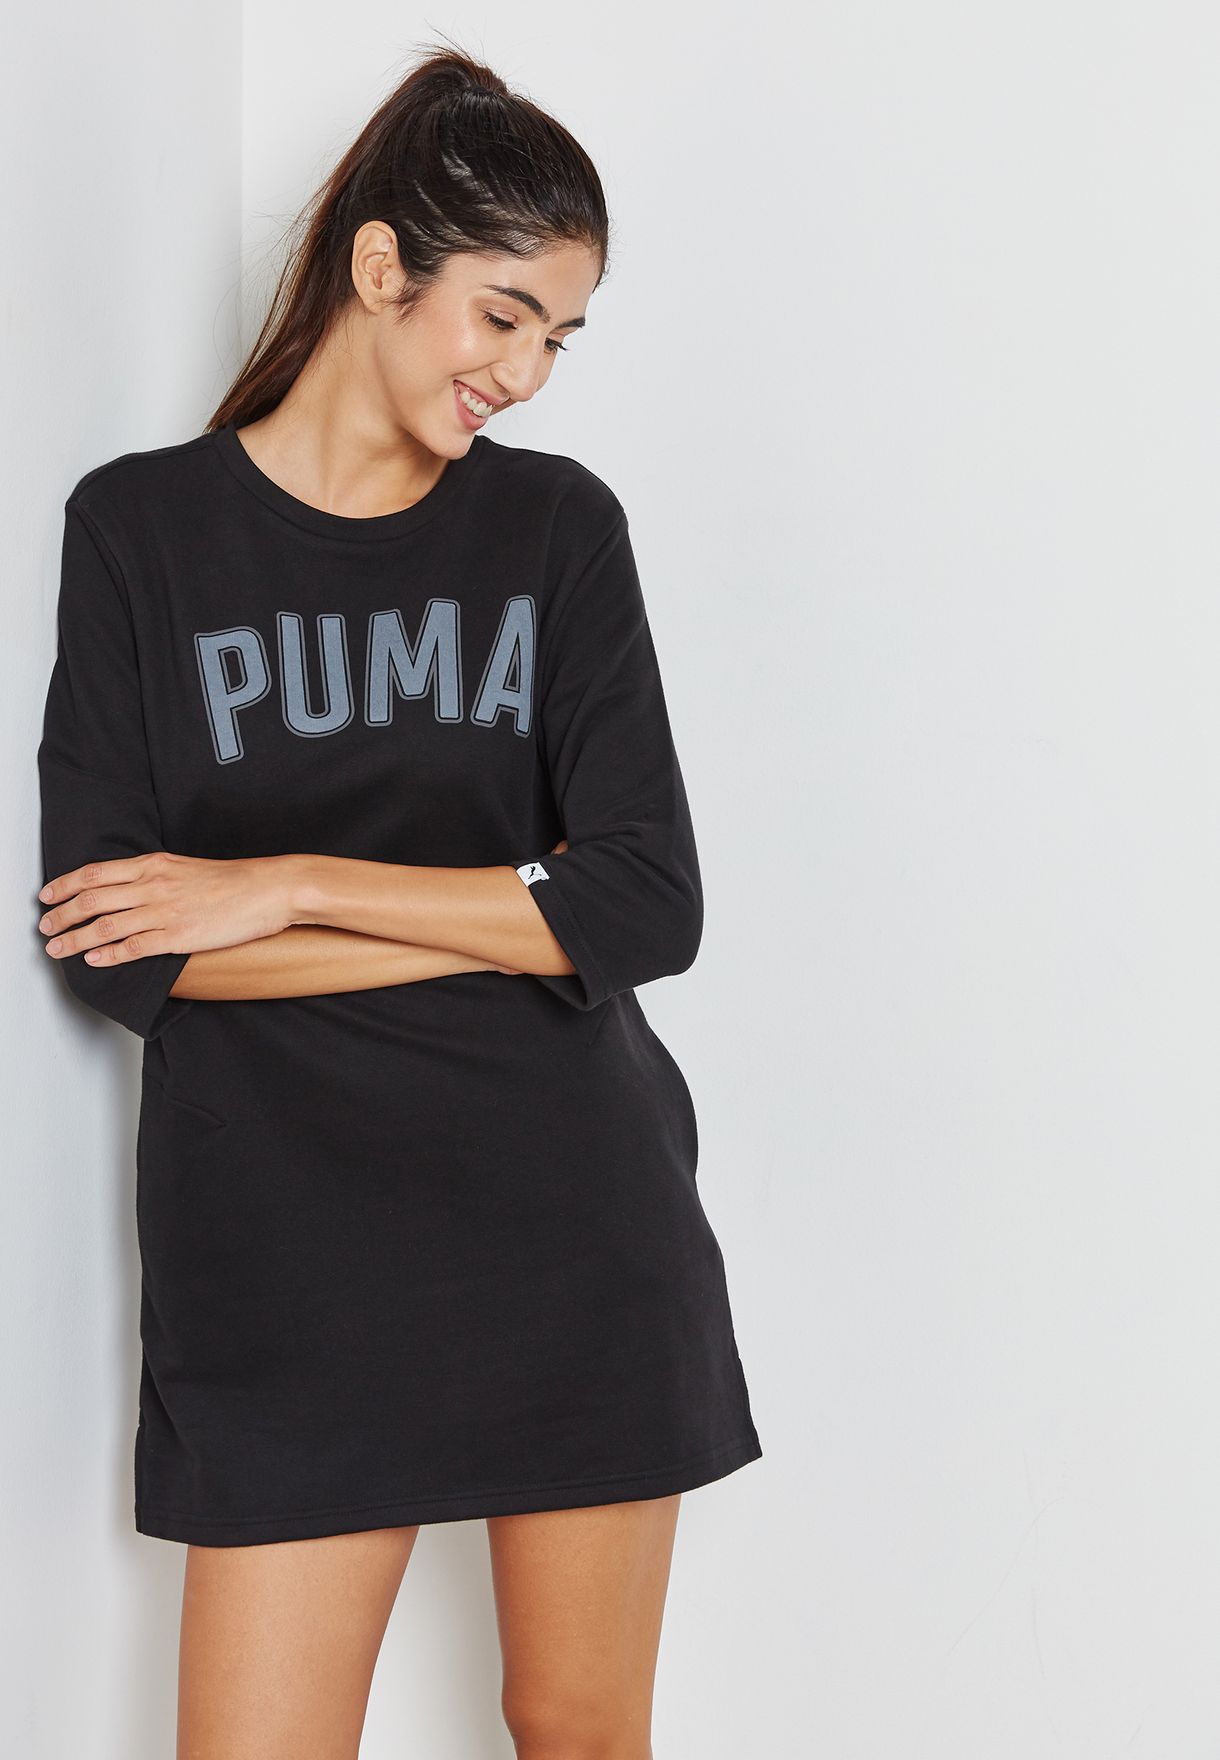 Buy Puma Black Athletic Sweat Dress for 